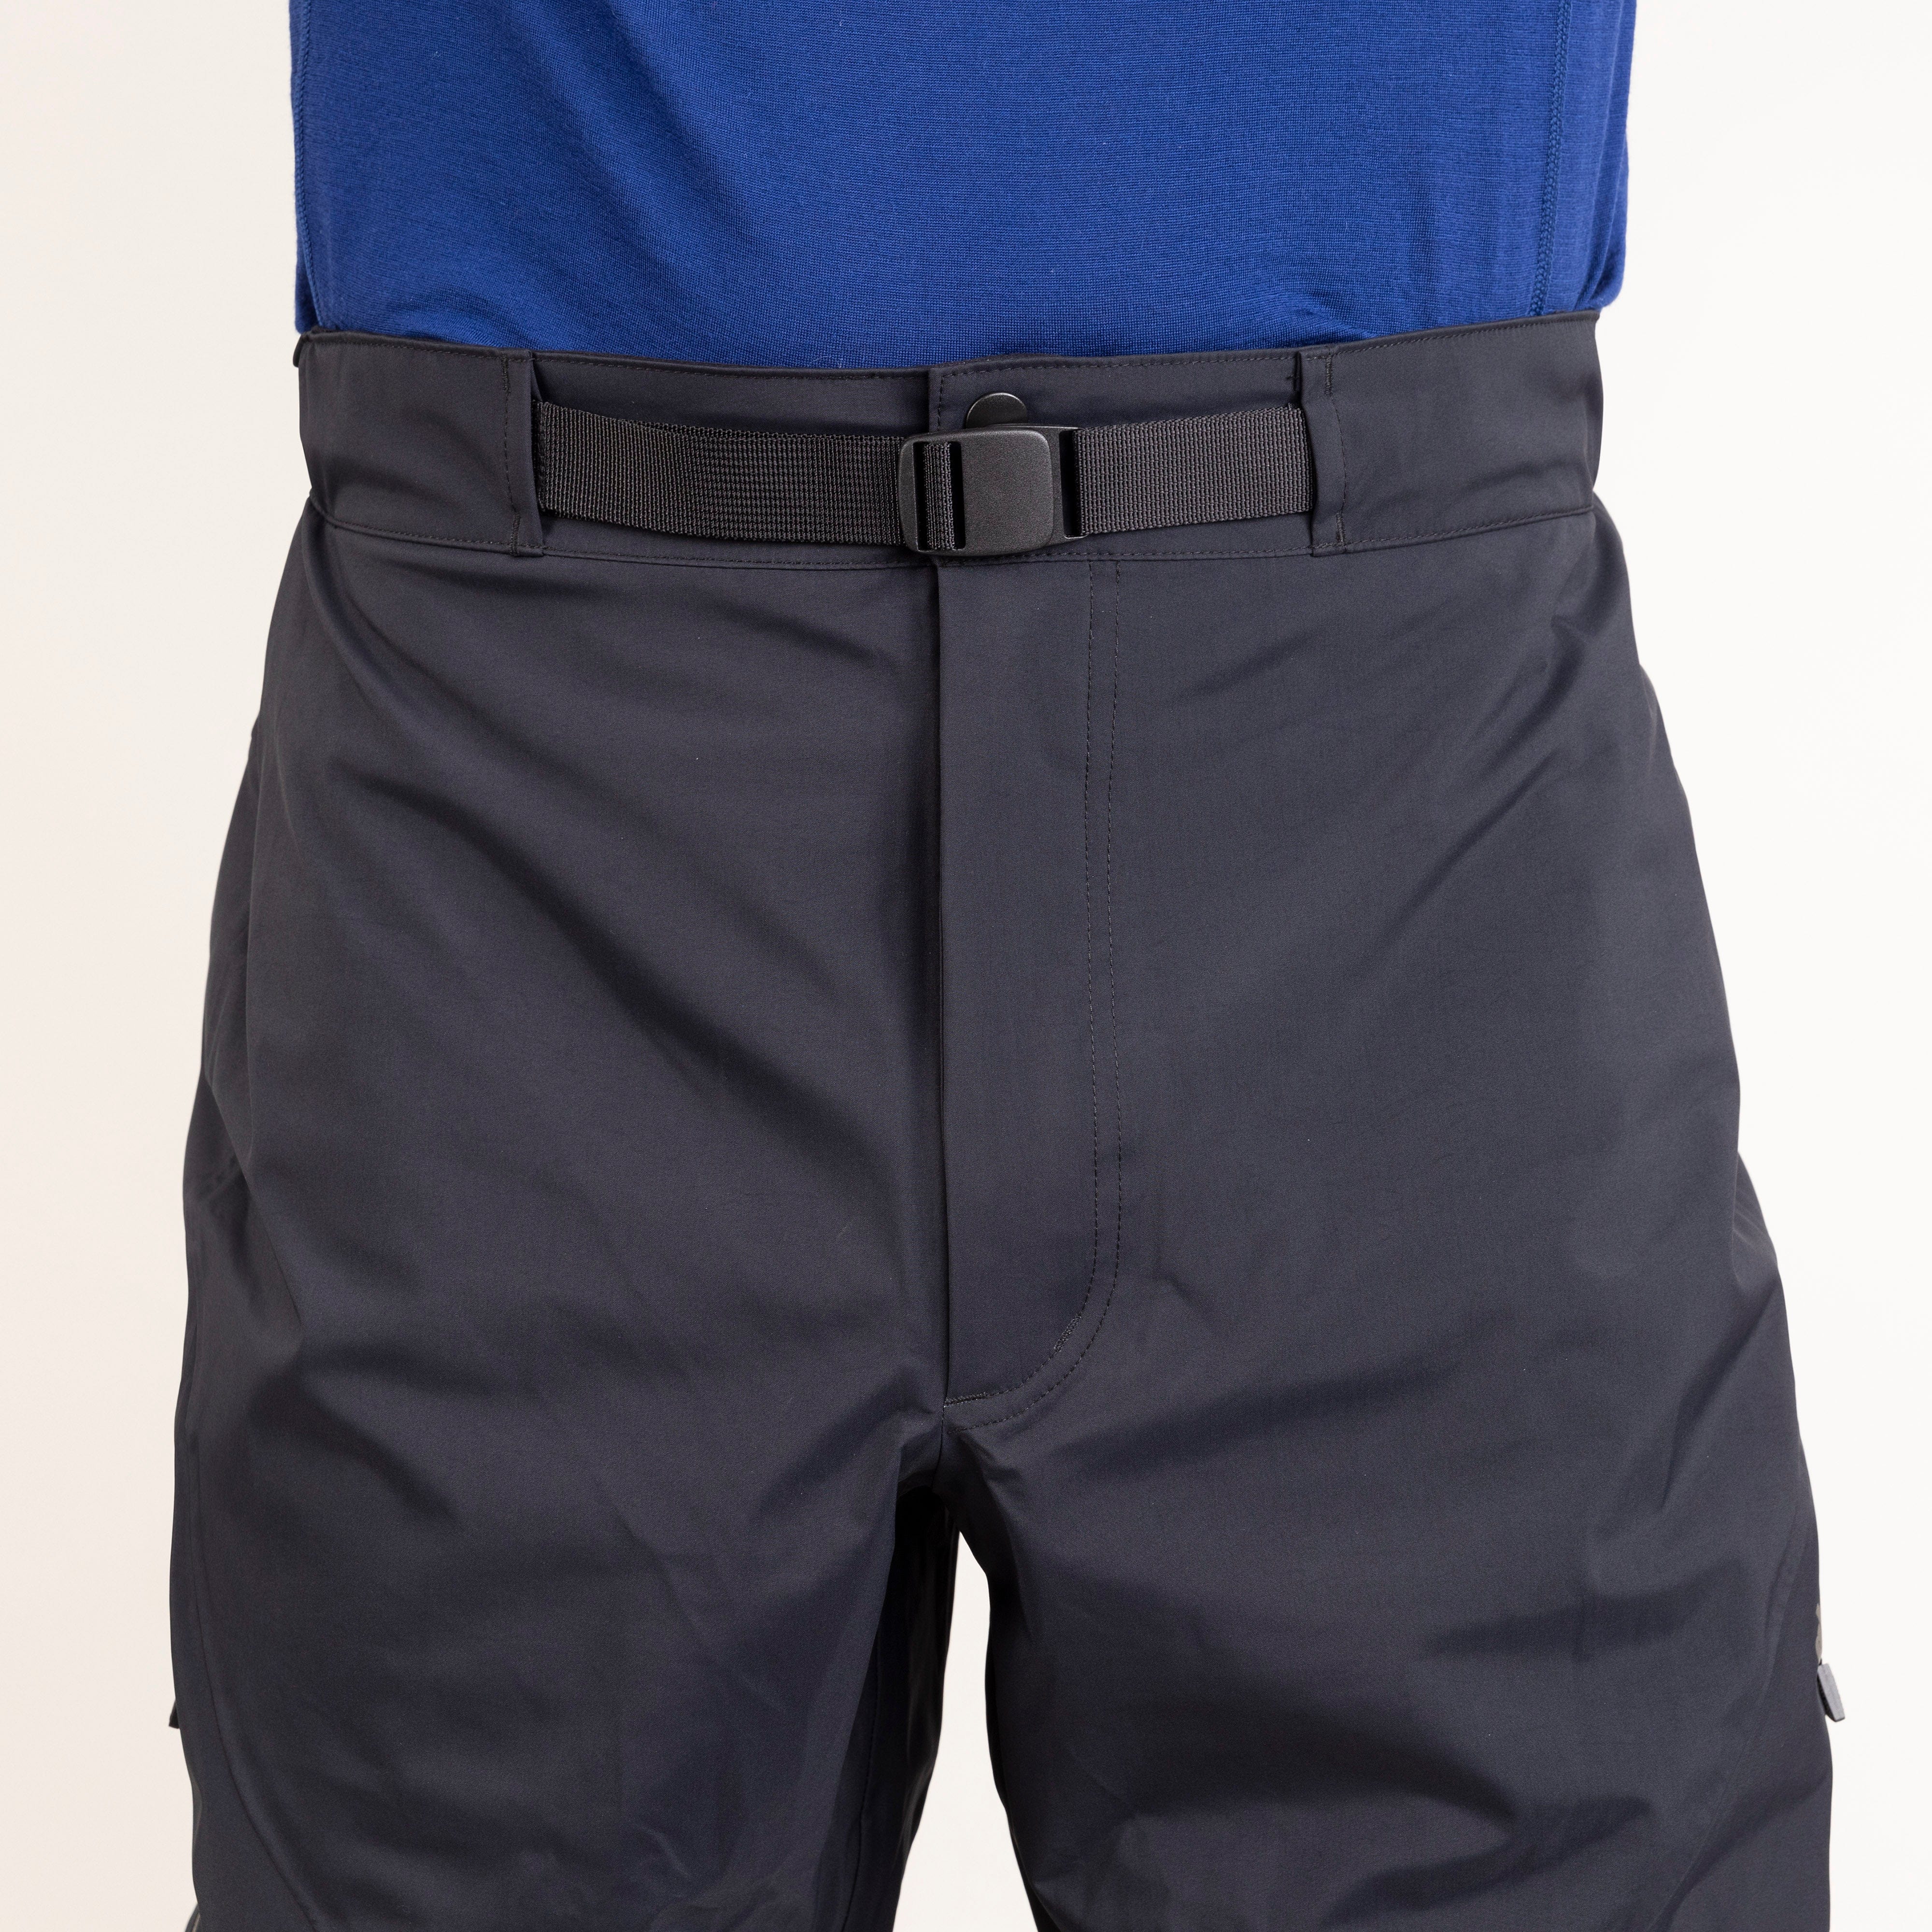 Waterproof Trousers Tactical Swat | Waterproof Military Swat Pants -  Tactical Pants - Aliexpress